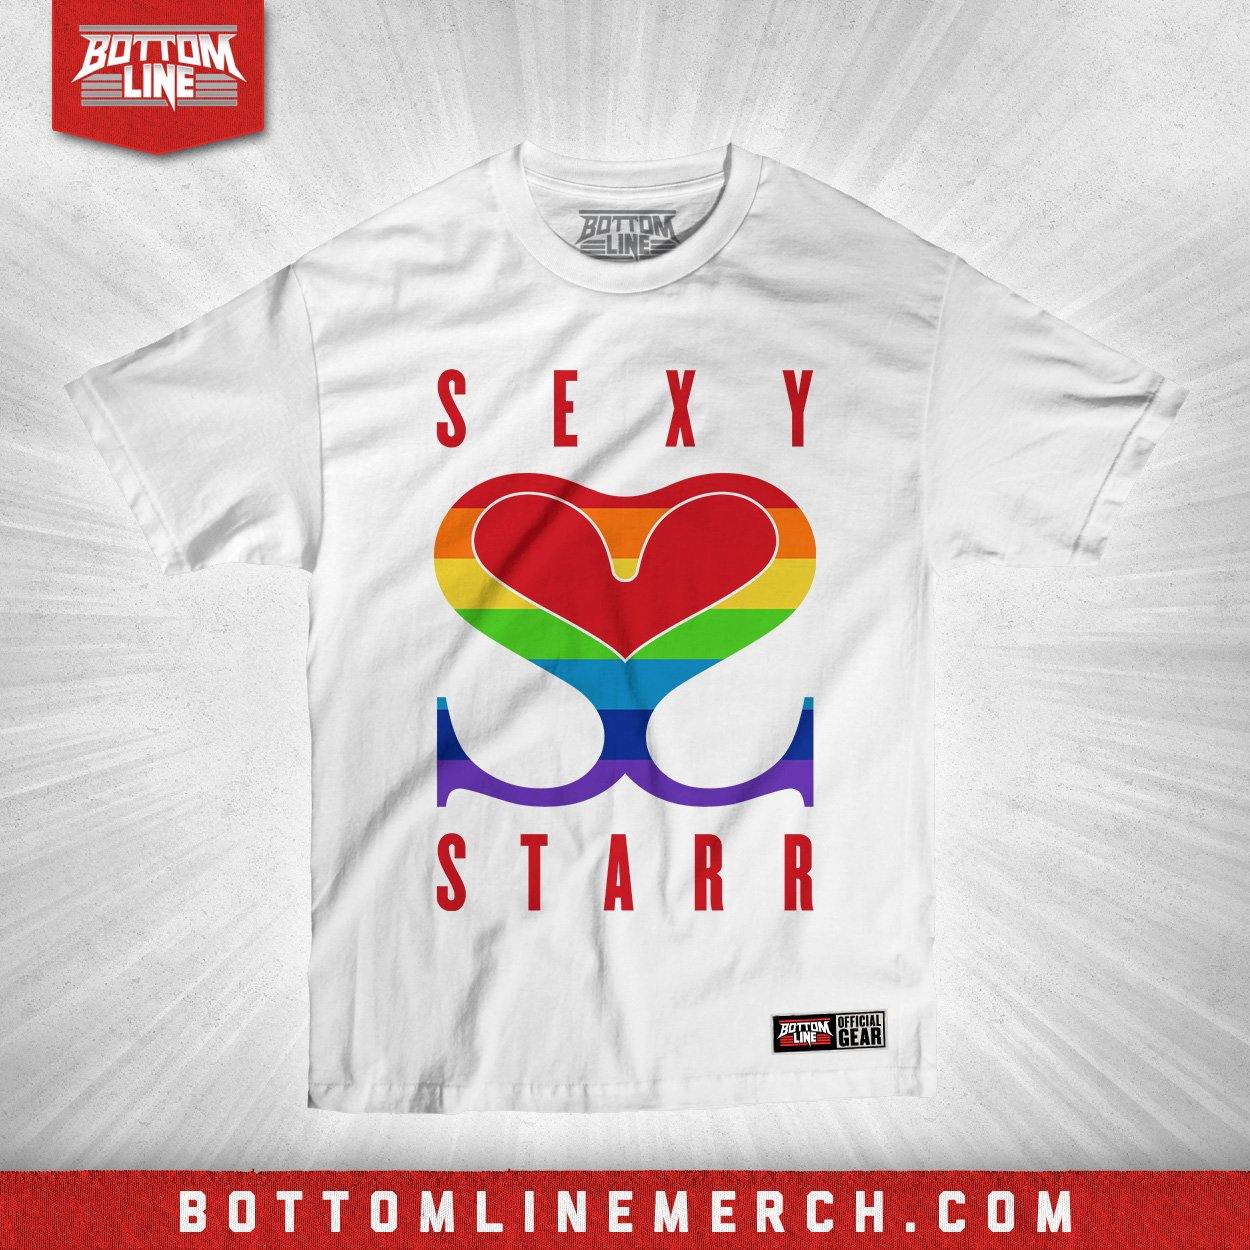 Buy Now – David Starr "Sexy Starr" Shirt – Wrestler & Wrestling Merch – Bottom Line